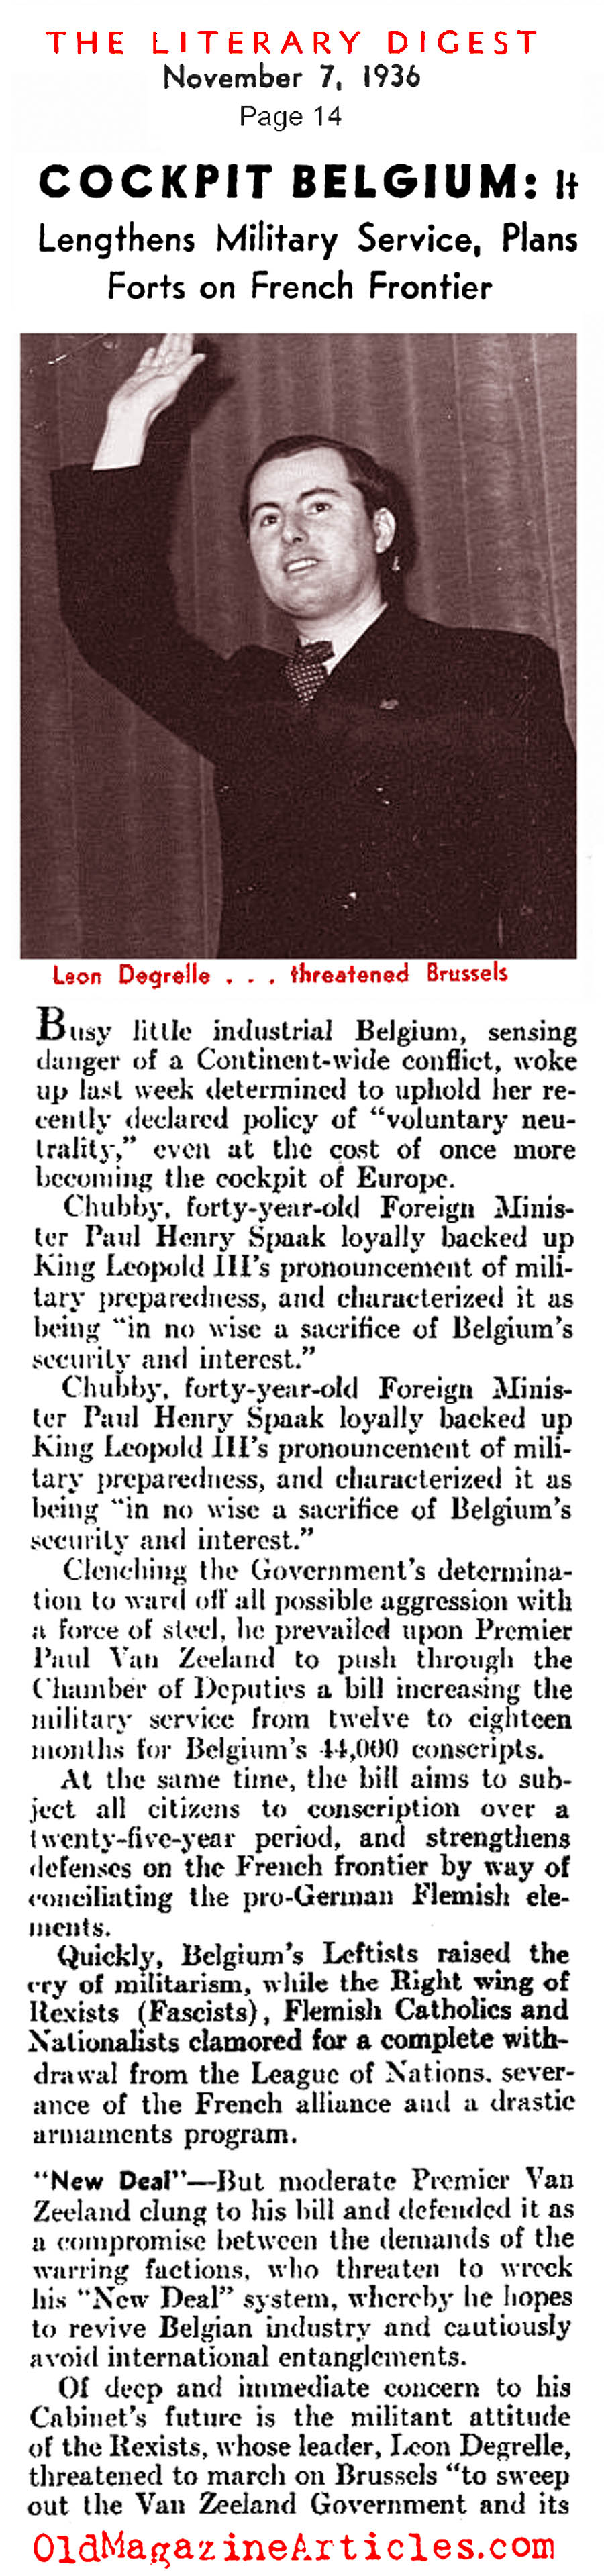 Military Buildup in Belgium (Literary Digest, 1936)